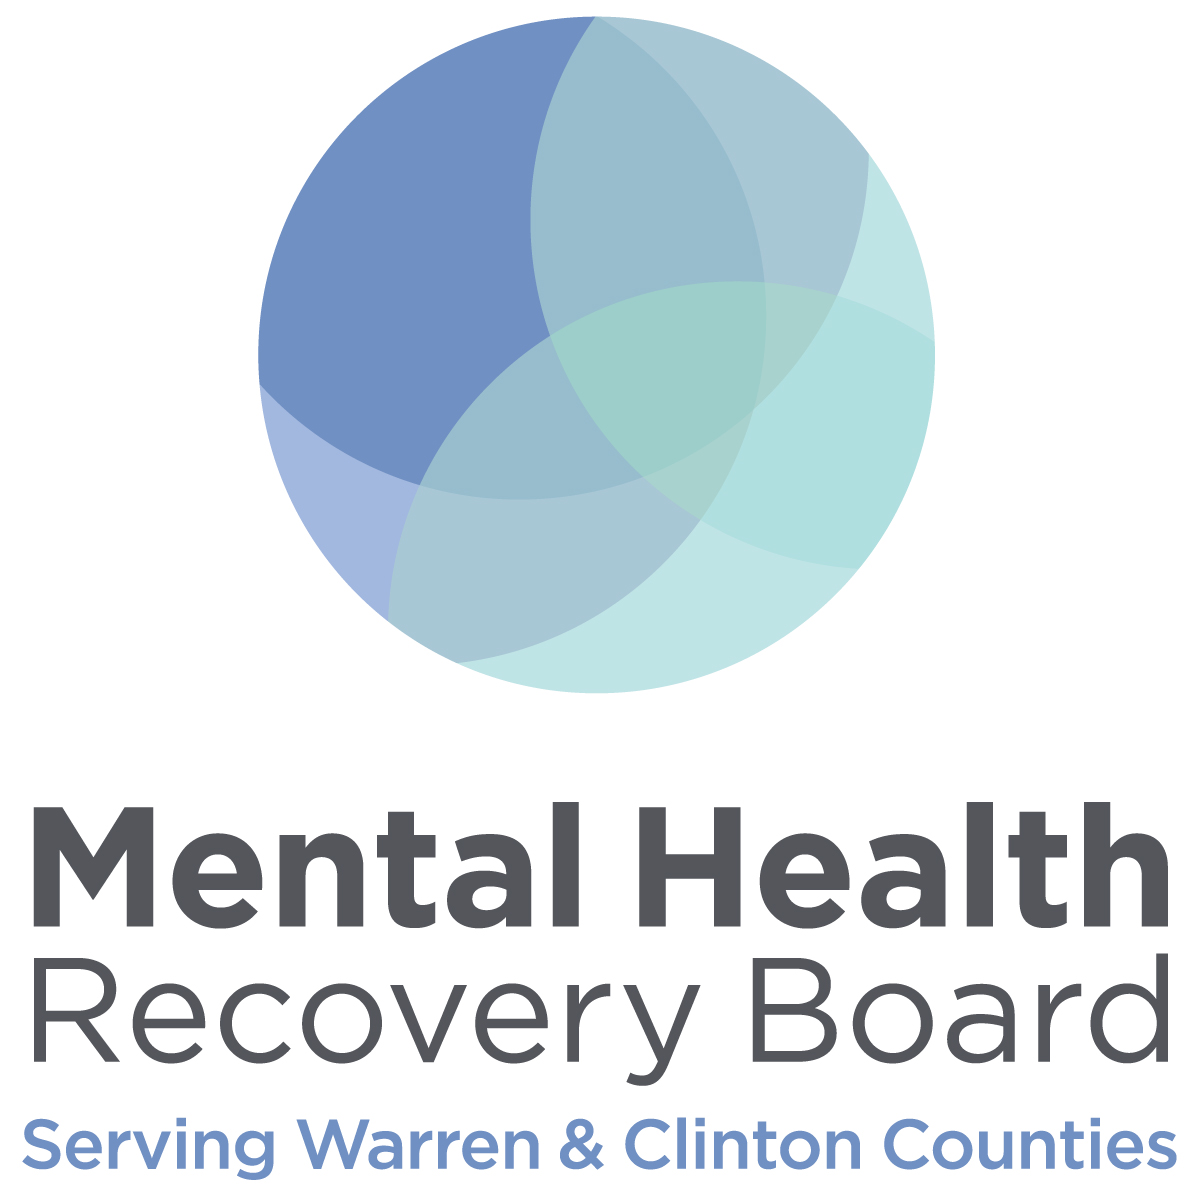 Mental Health Recovery Board Serving Warren & Clinton Counties Logo